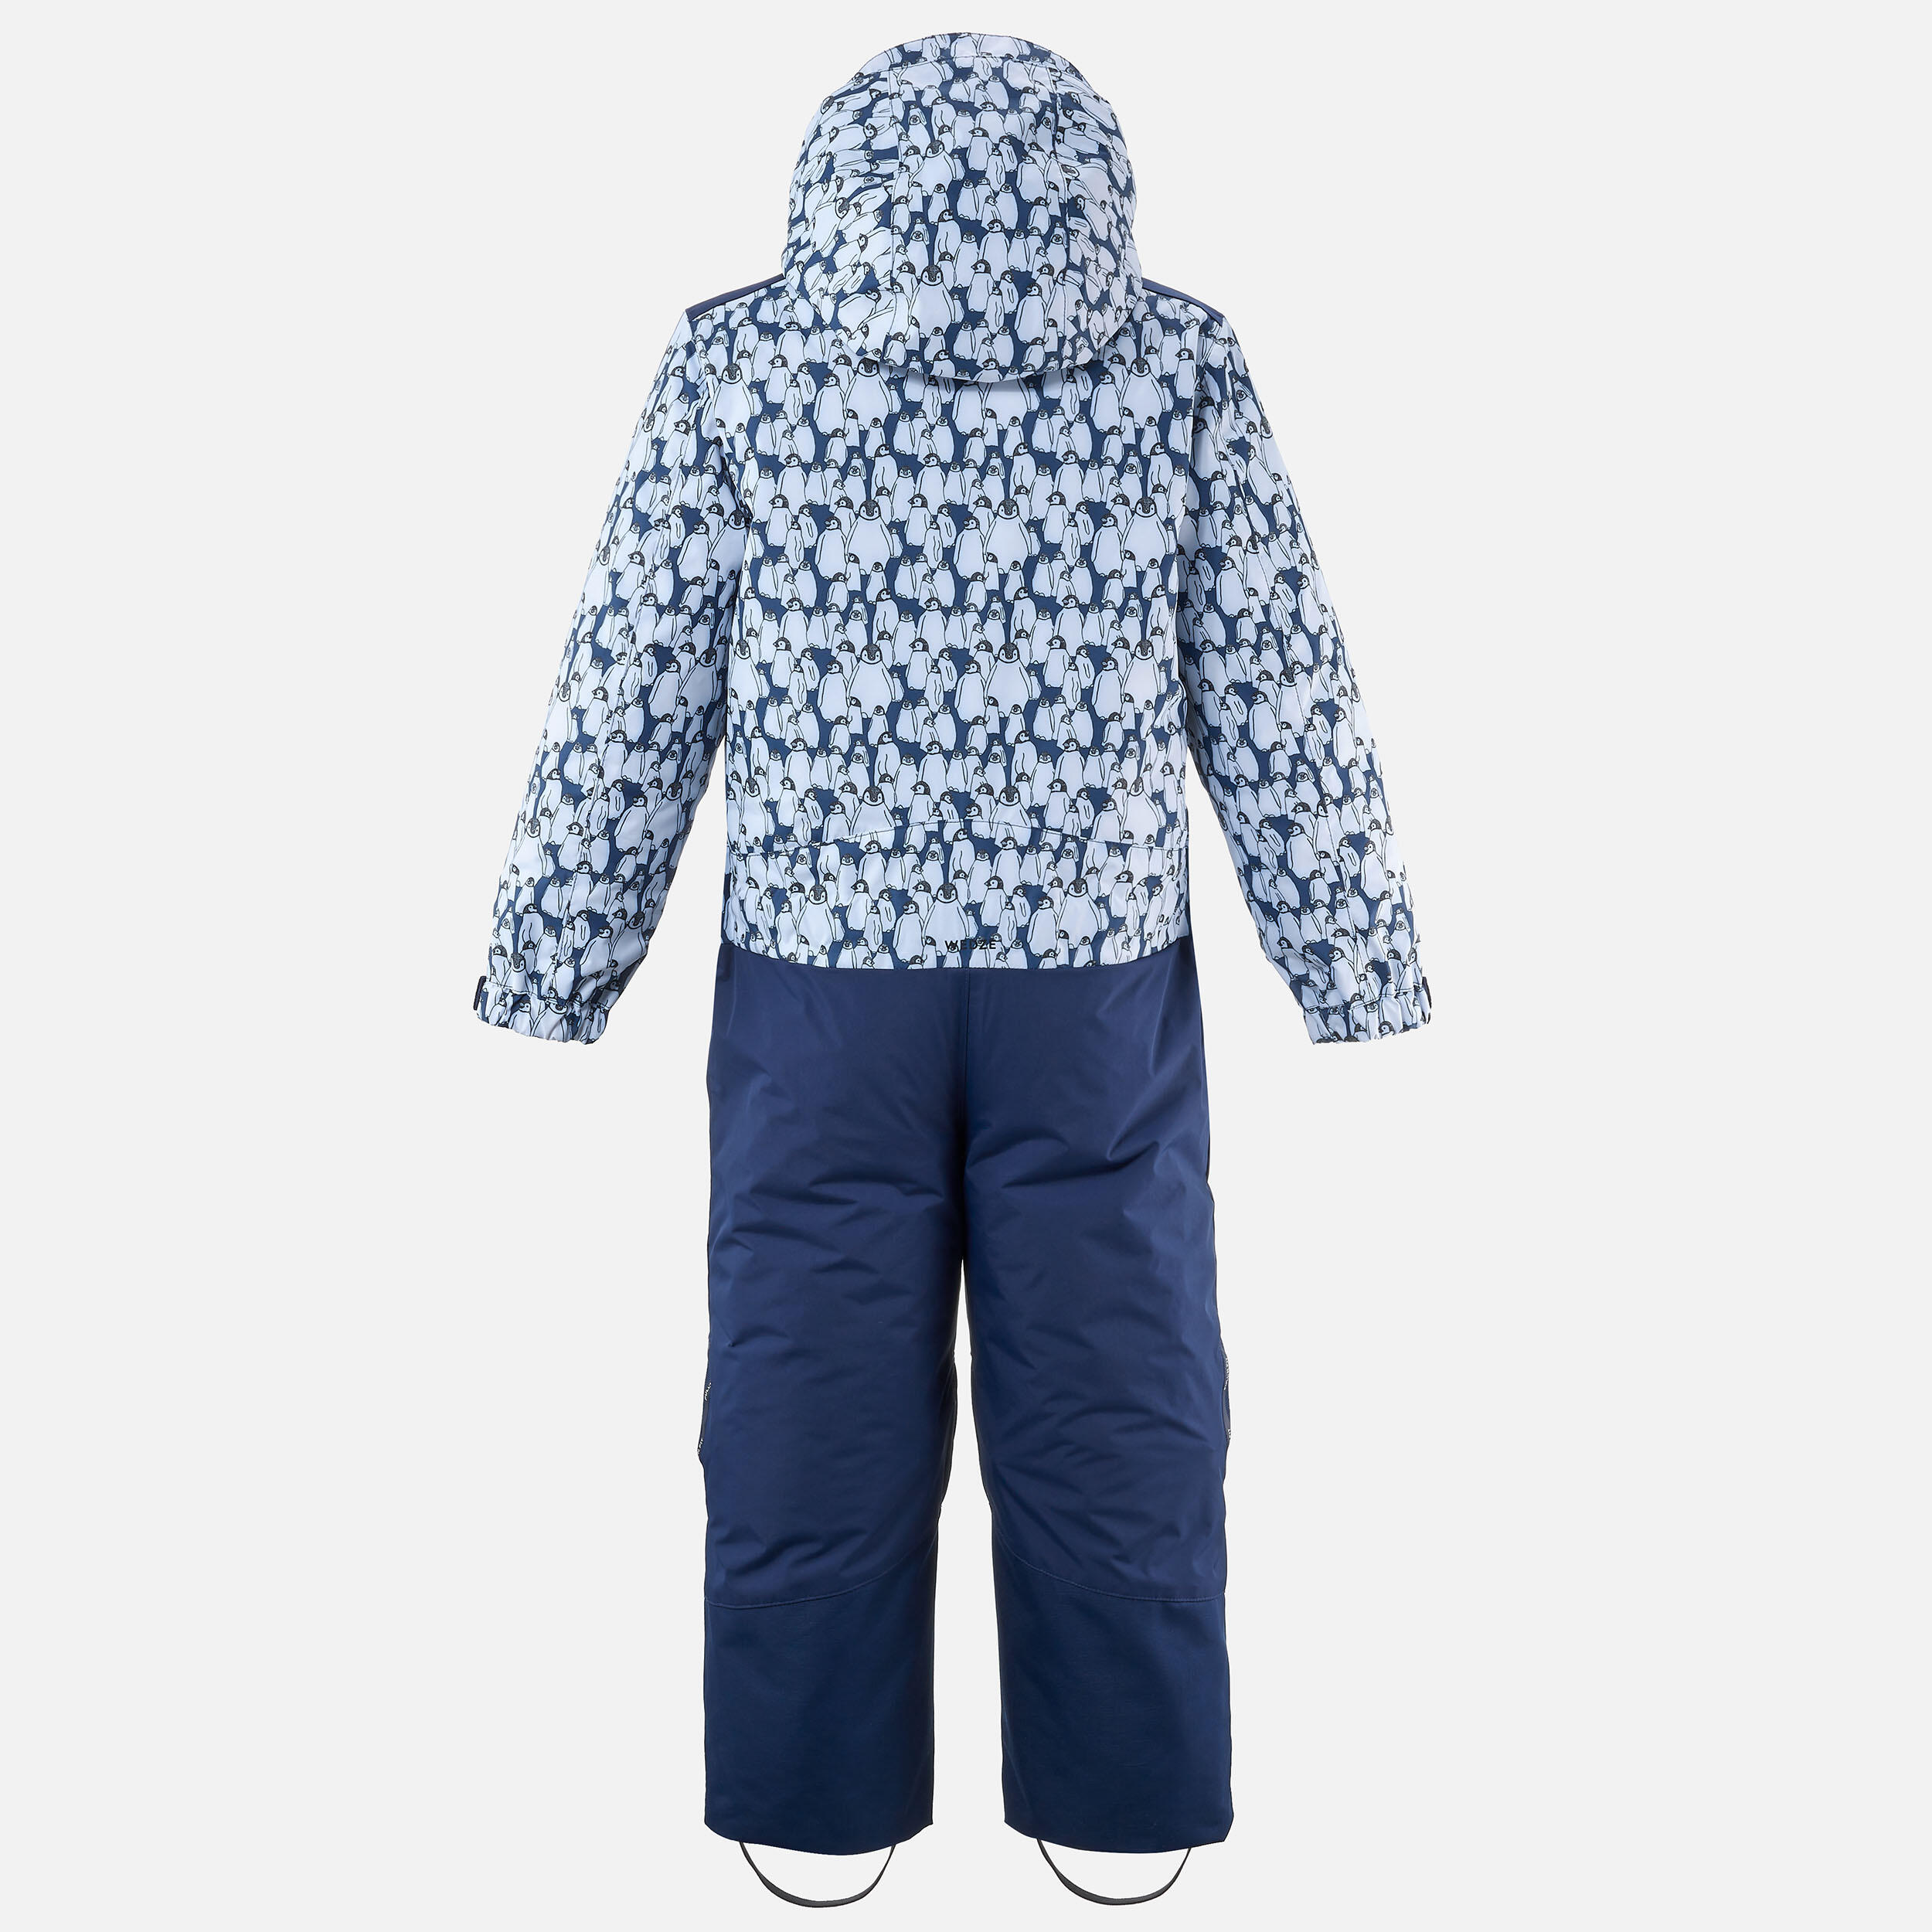 Kids’ Warm and Waterproof Ski Suit PNF 500 - Penguins 7/8